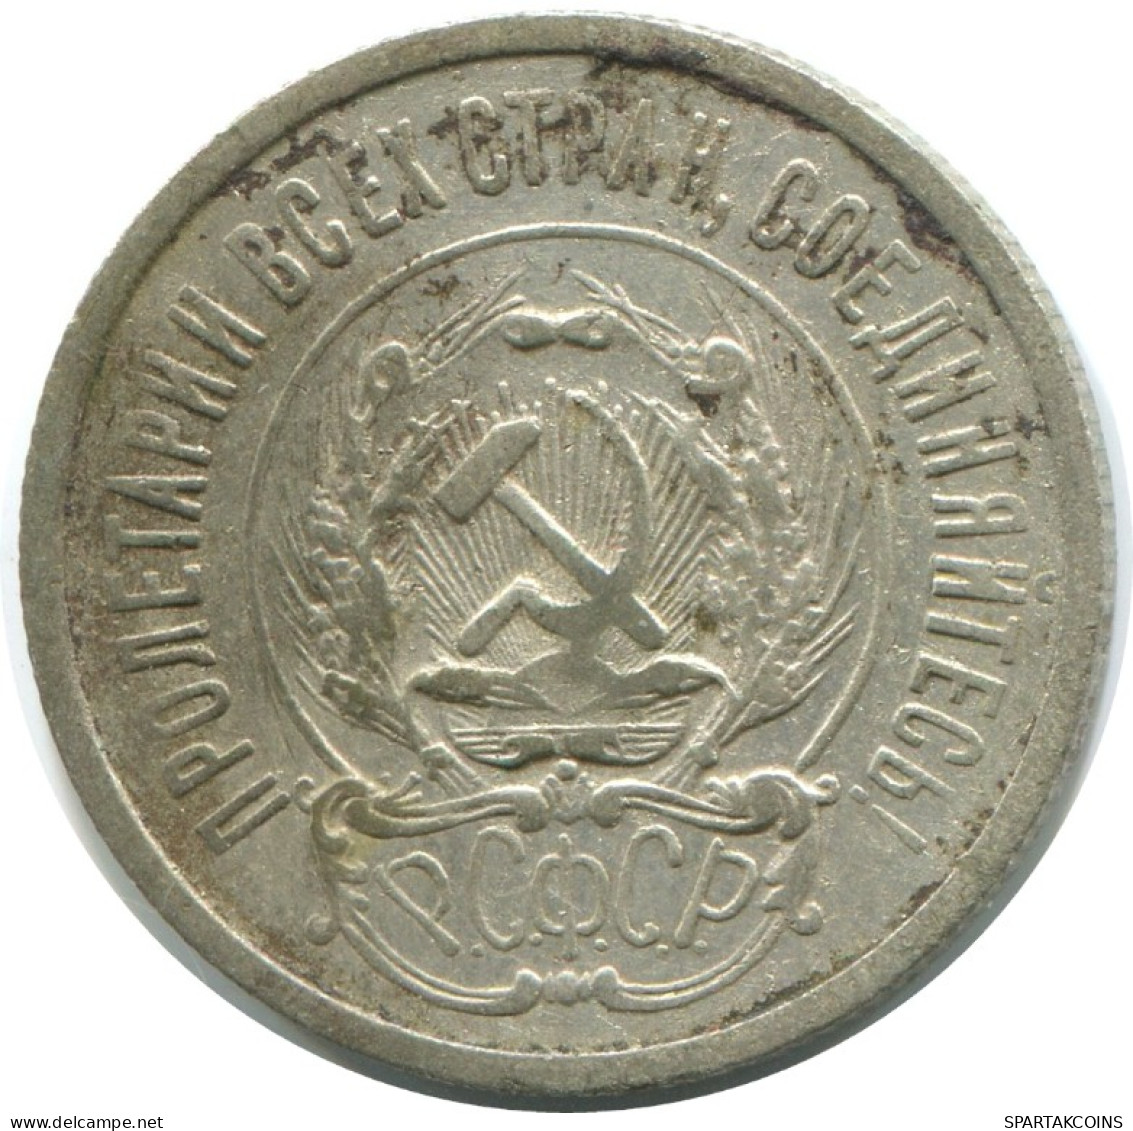 20 KOPEKS 1923 RUSSIA RSFSR SILVER Coin HIGH GRADE #AF479.4.U.A - Russia